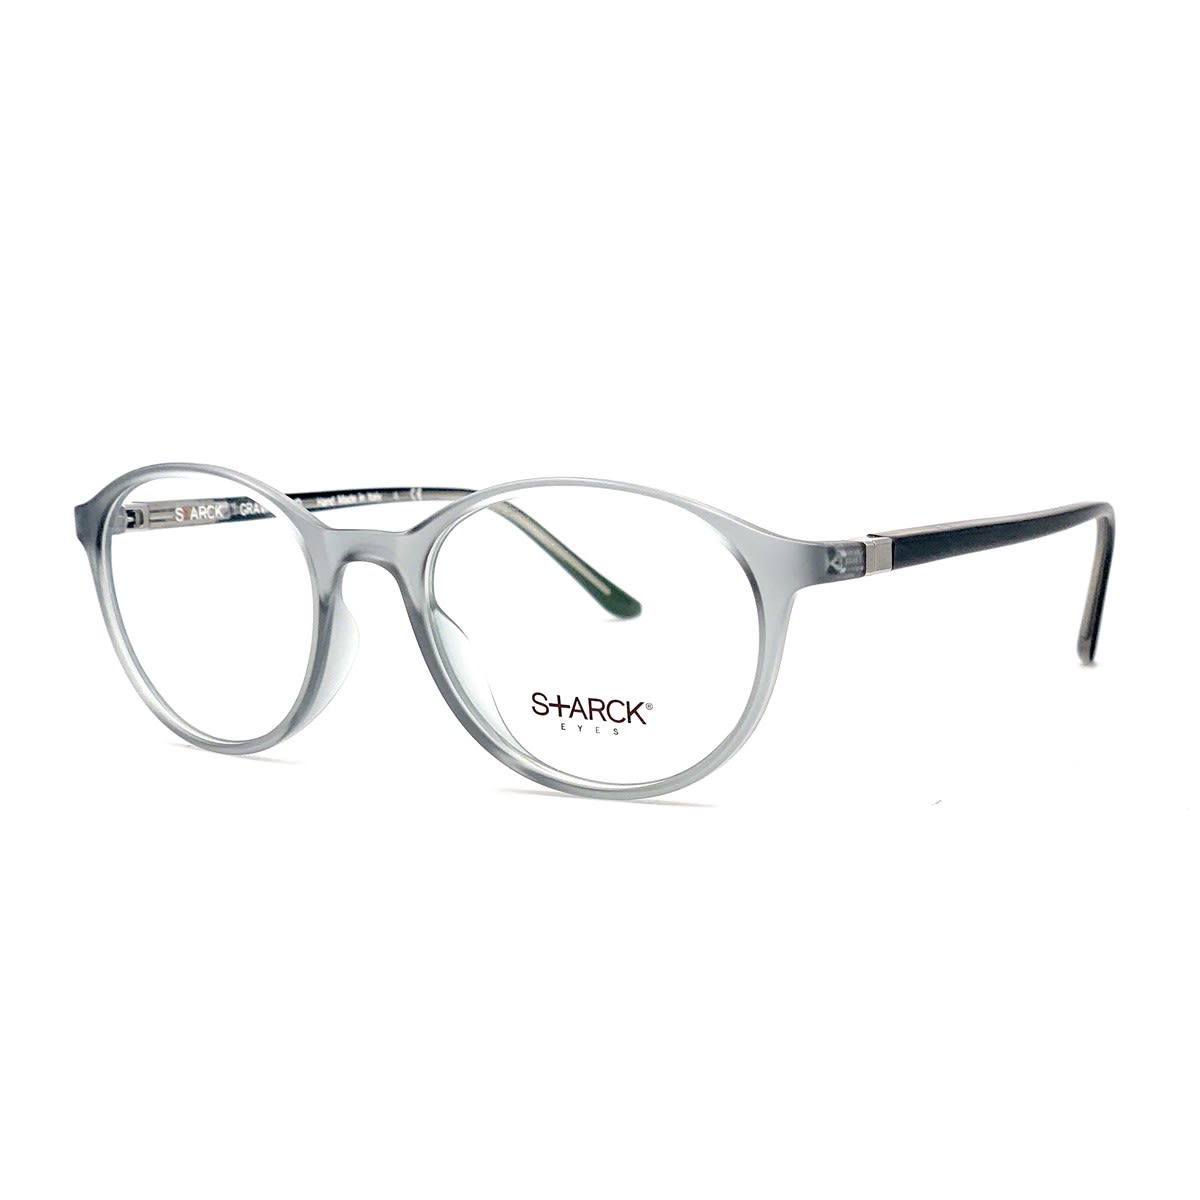 Philippe Starck 3007x Vista Glasses In Grigio